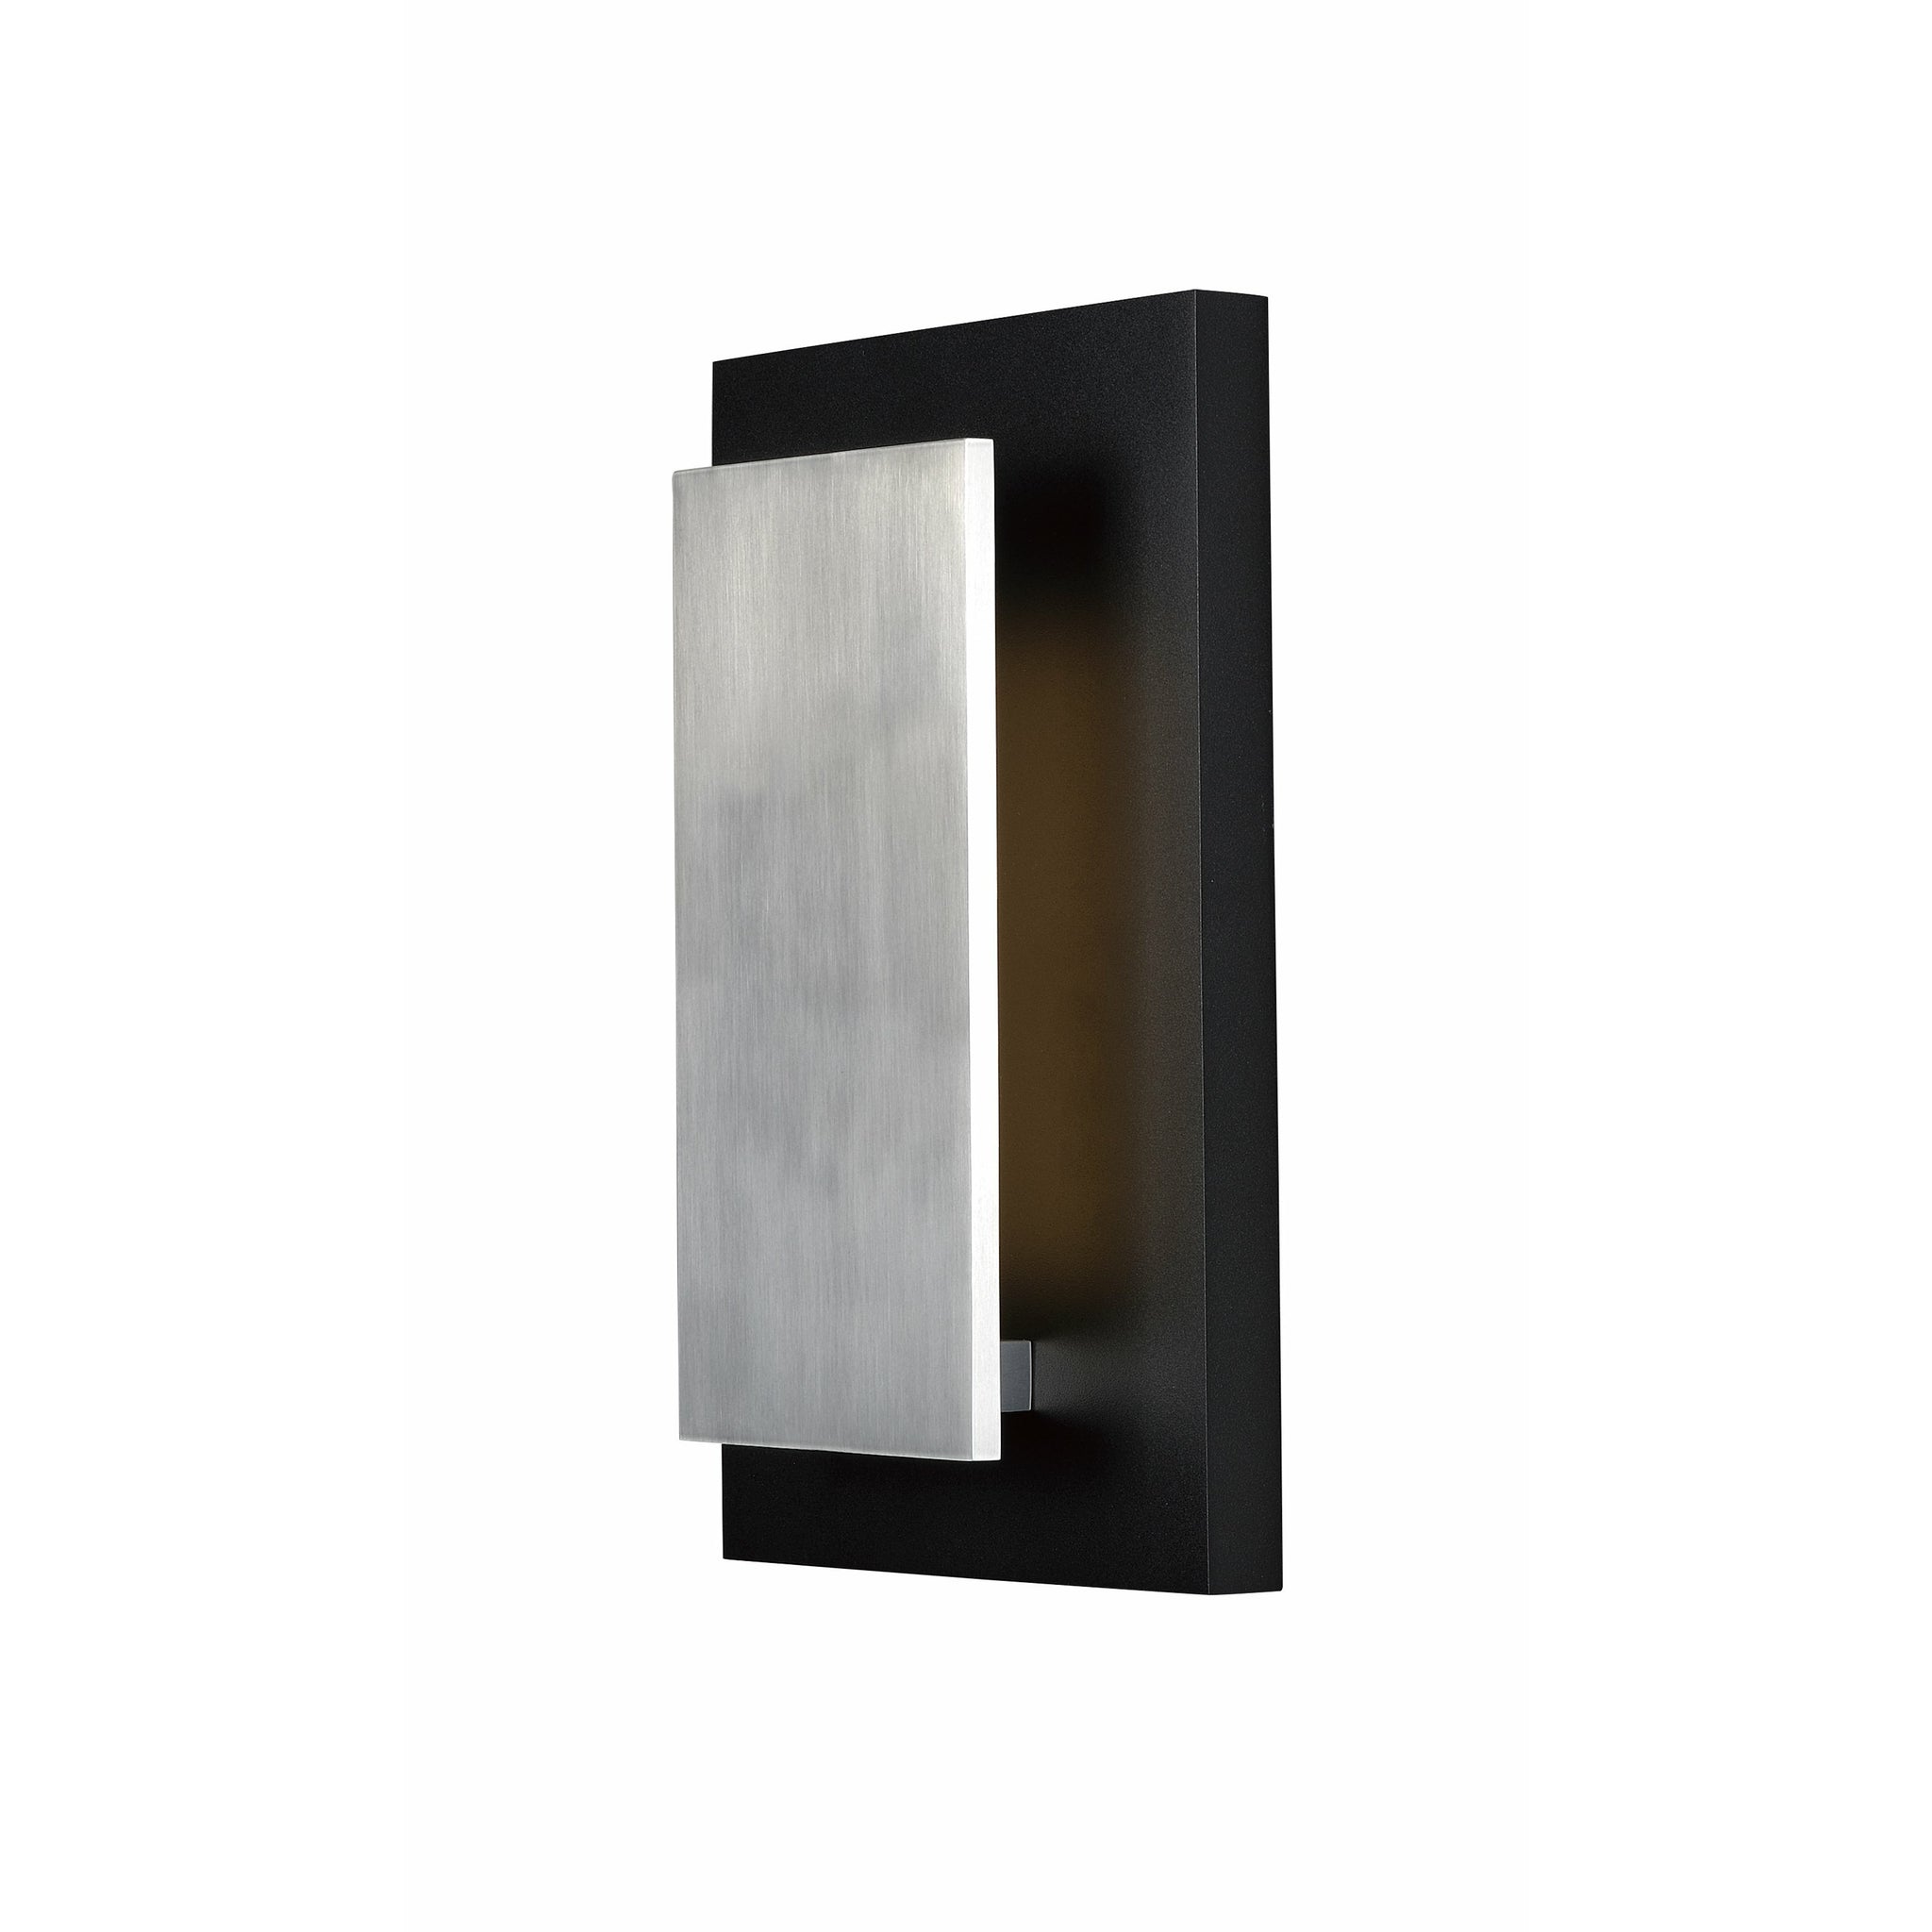 Alumilux Piso Outdoor Wall Light Black / Satin Aluminum